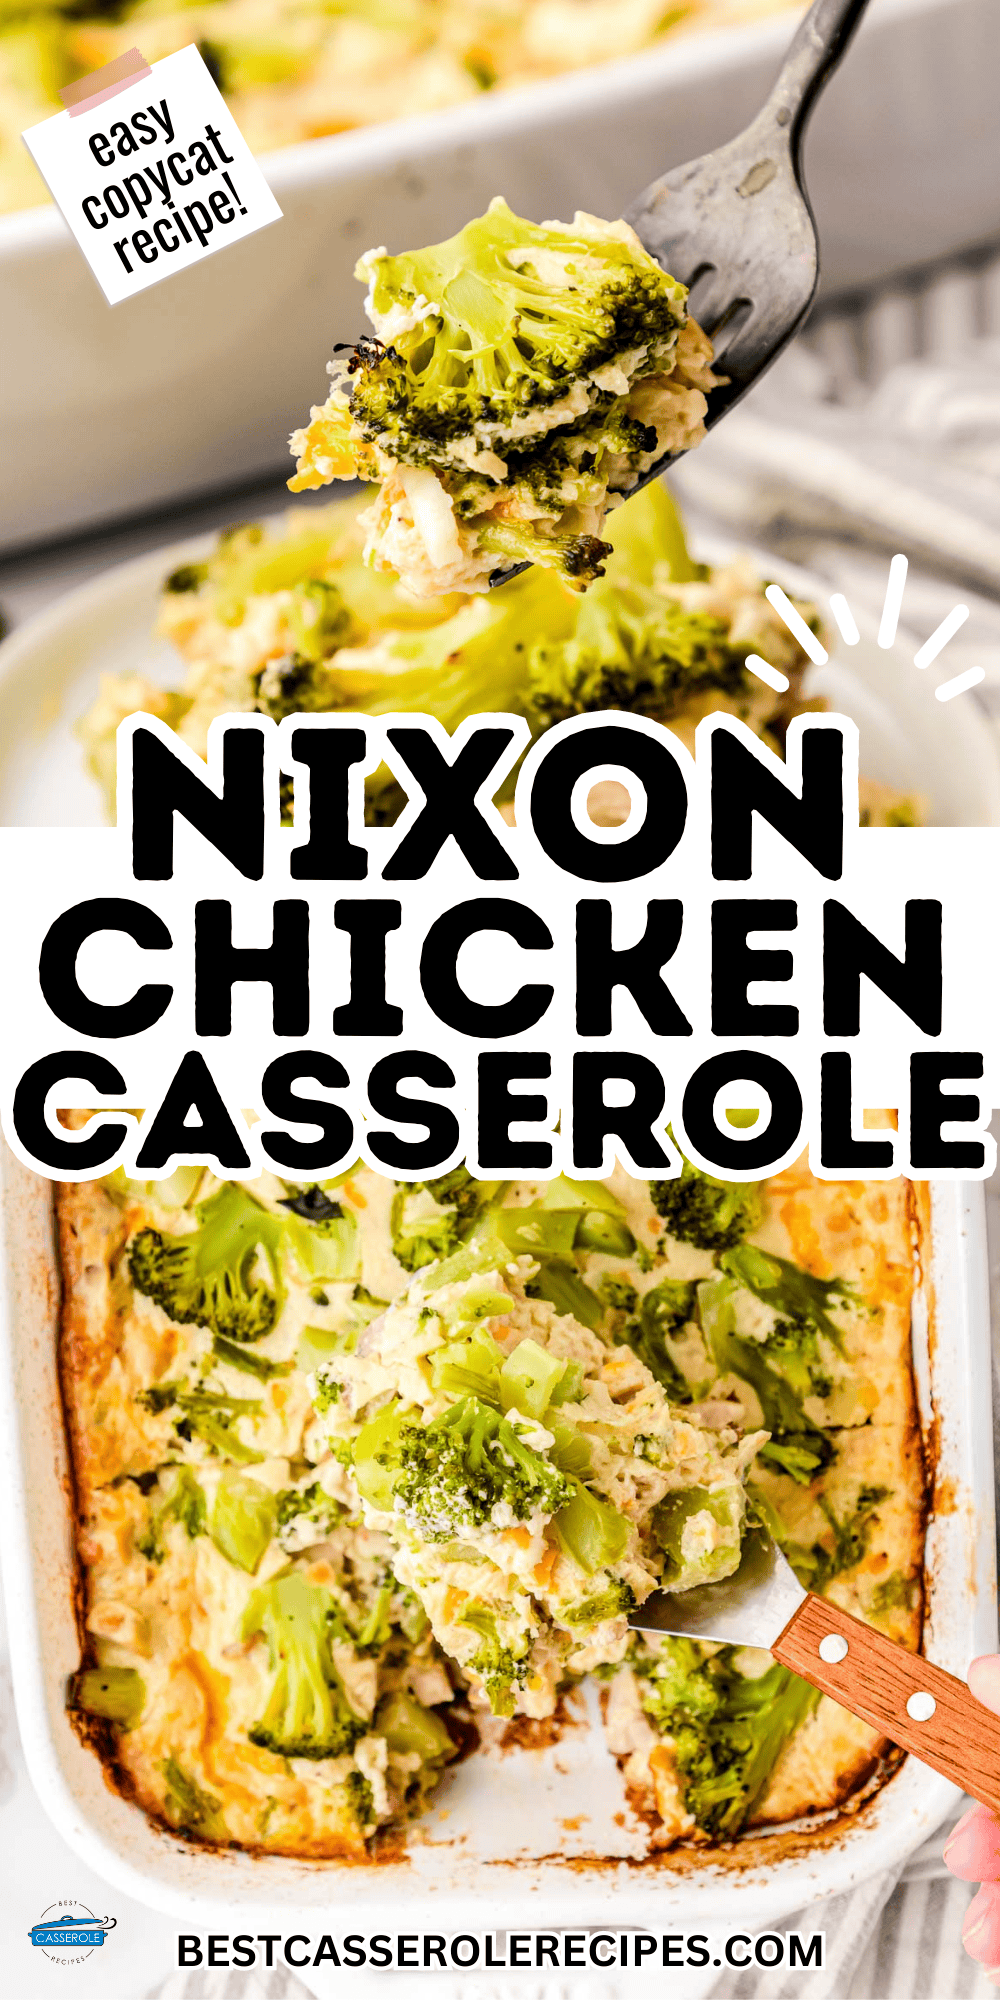 Nixon chicken casserole recipe photos in a collage